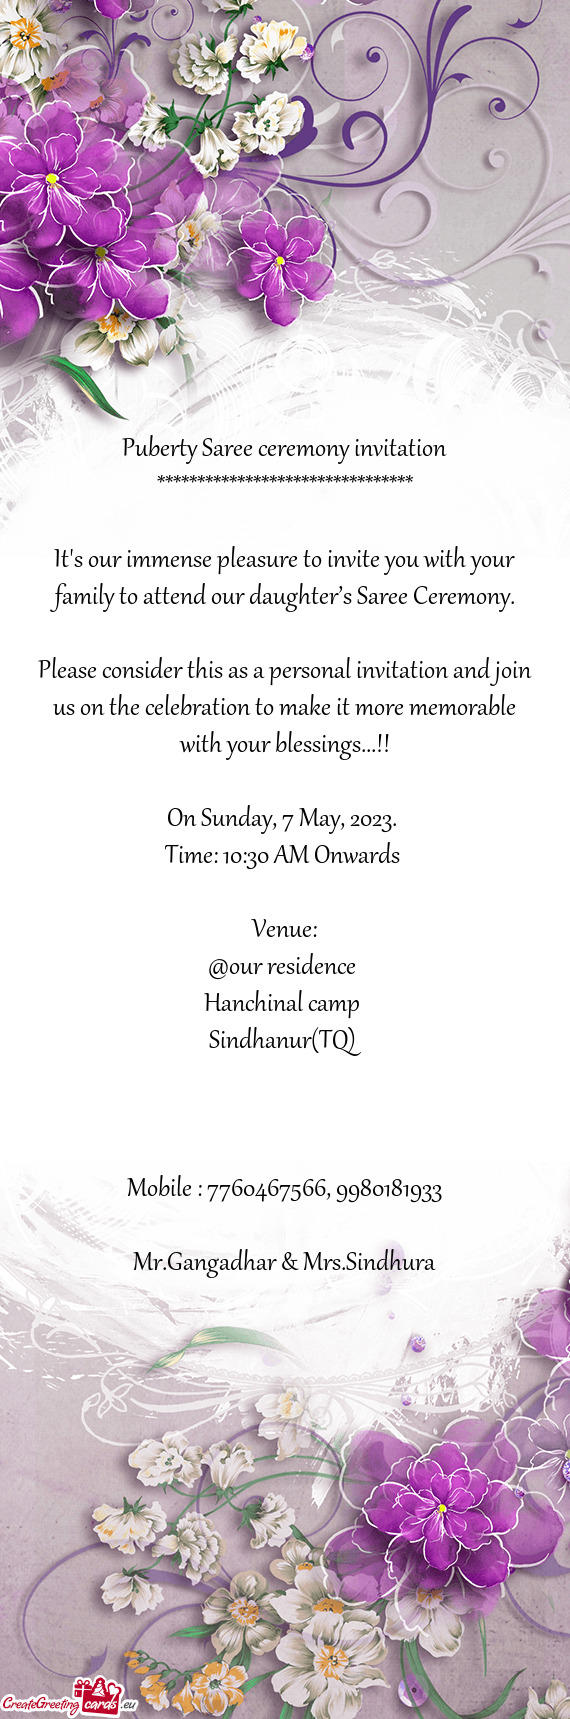 Puberty Saree ceremony invitation